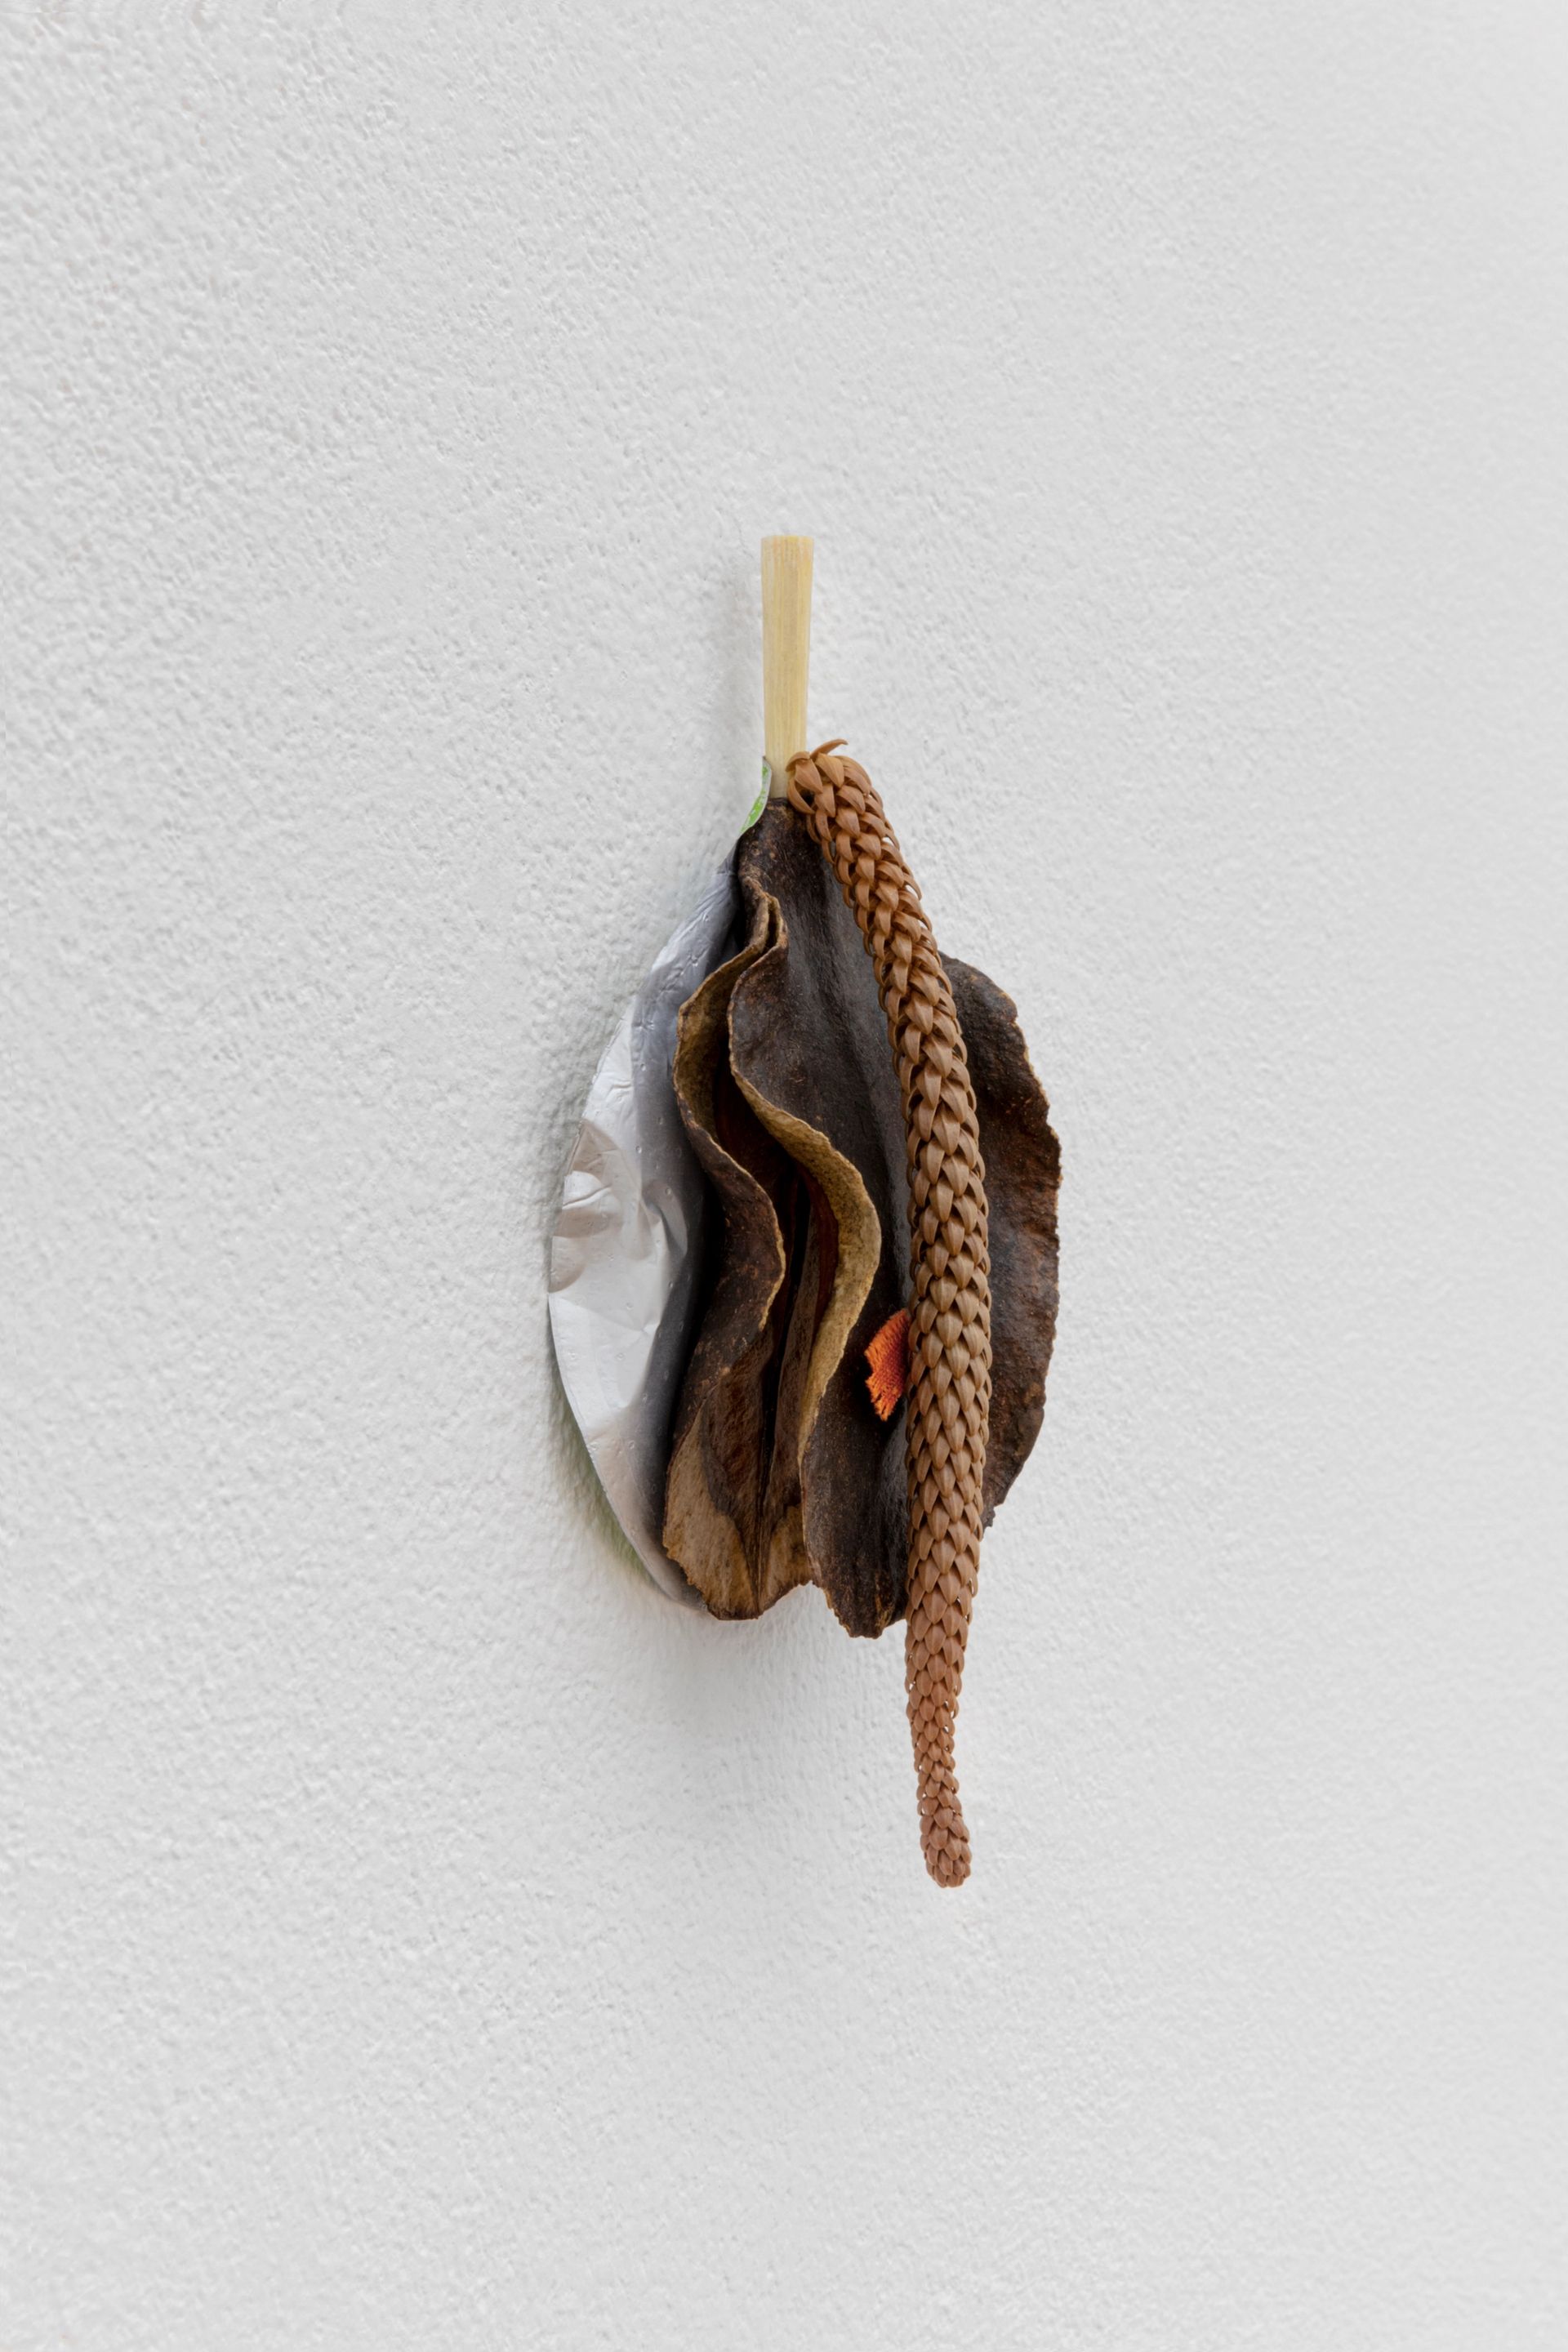 David Fesl, Untitled, 2022, Aluminum yogurt cup lid, bamboo chopstick, dried seeded fruit, parasitic plant, cloth, 13.9 × 6.4 × 2.9 cm, photo: Sebastian Kissel
